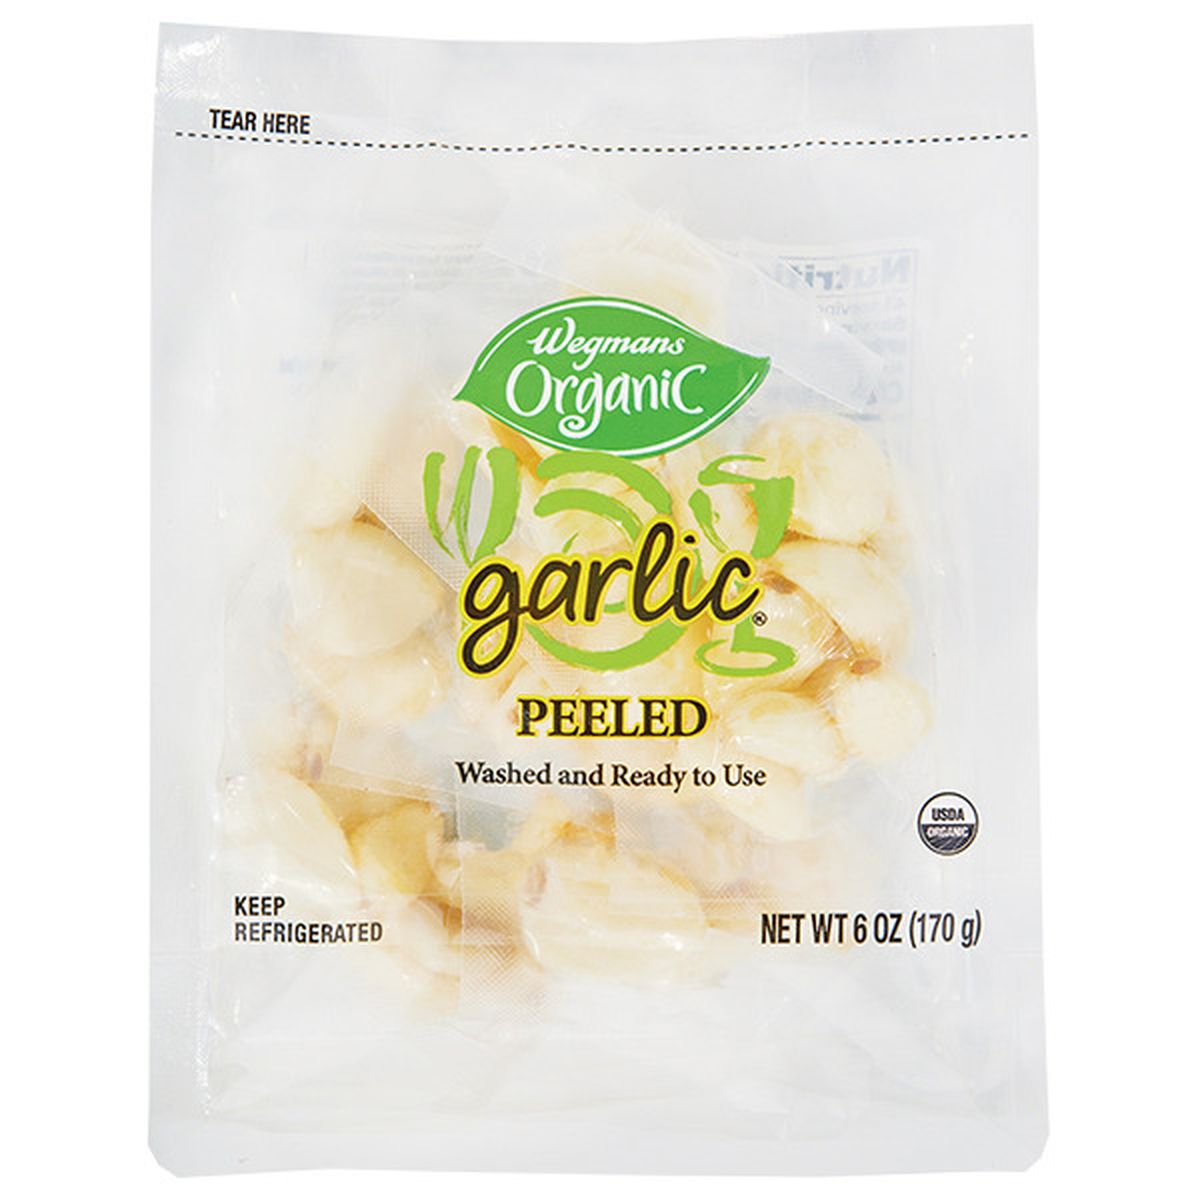 Calories in Wegmans Organic Peeled Garlic